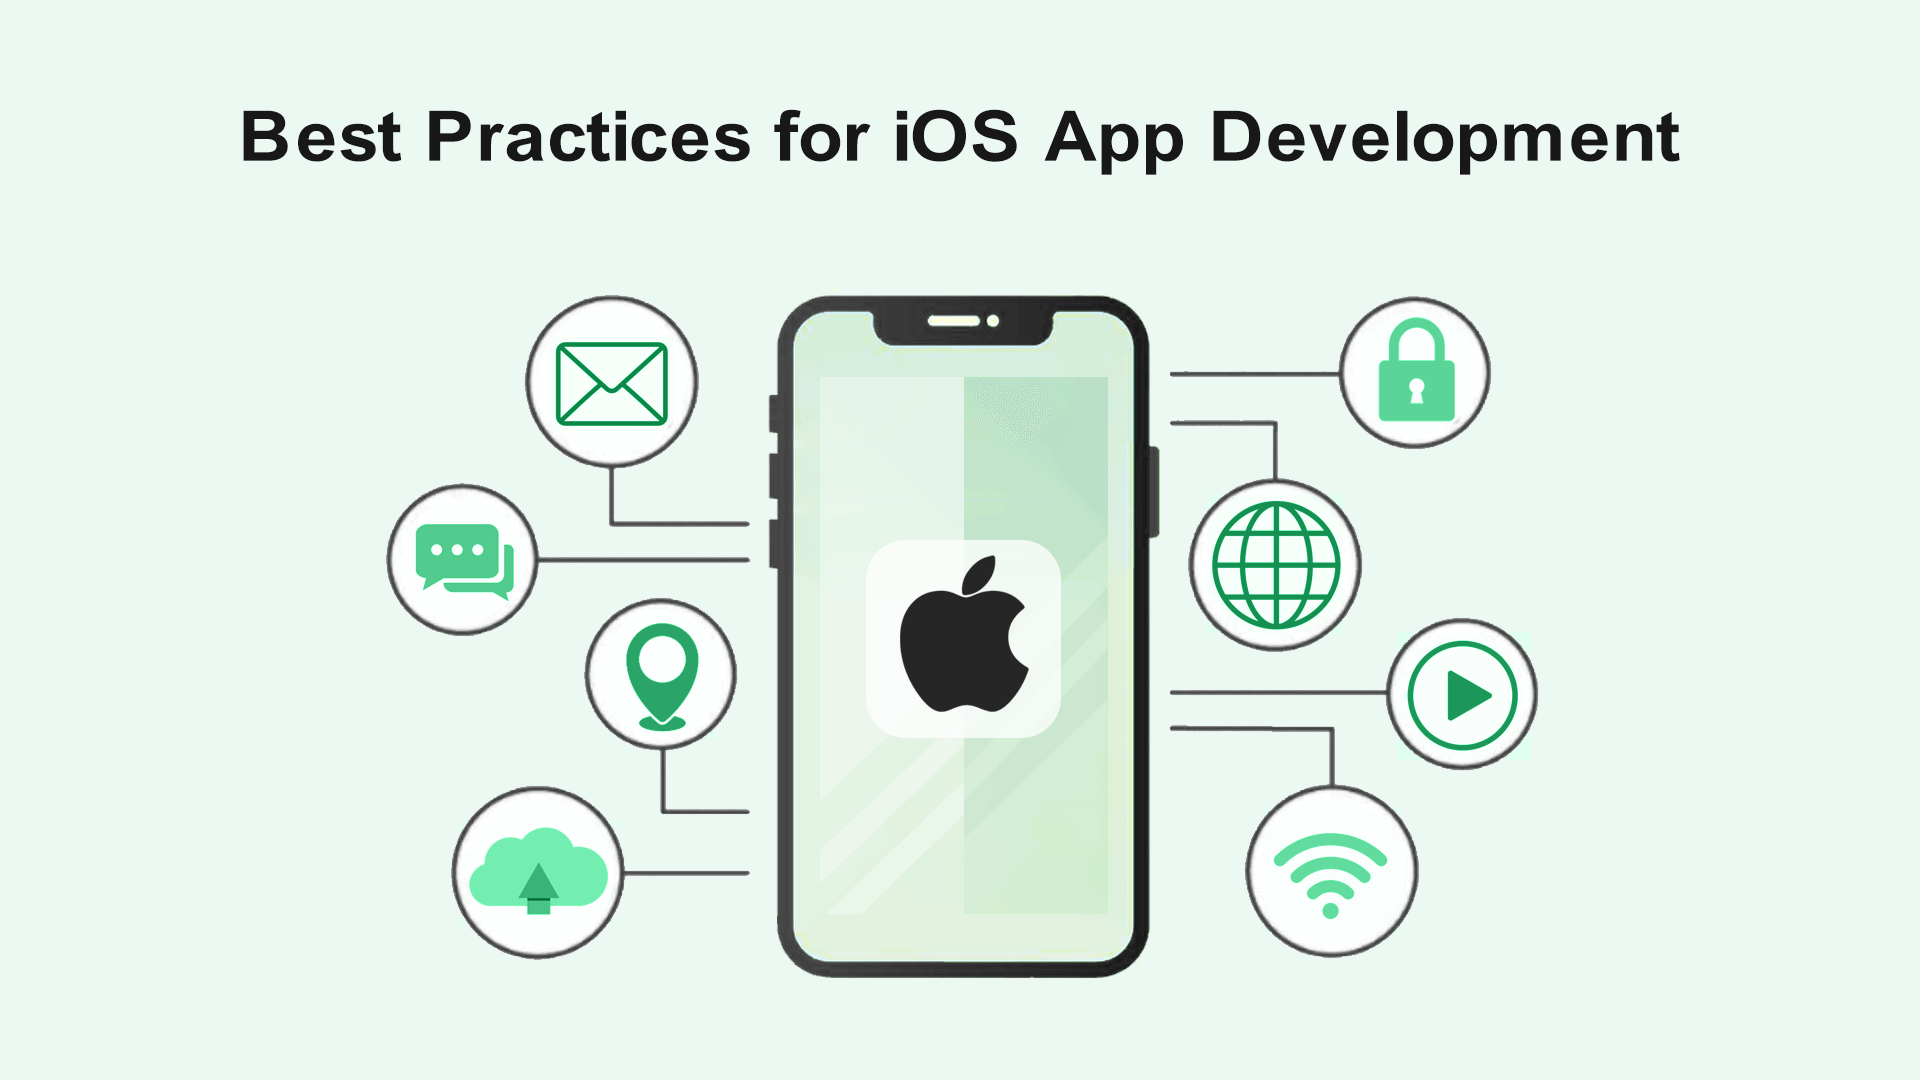 iOS App Development: Top Practices, Tools, & Benefits 3